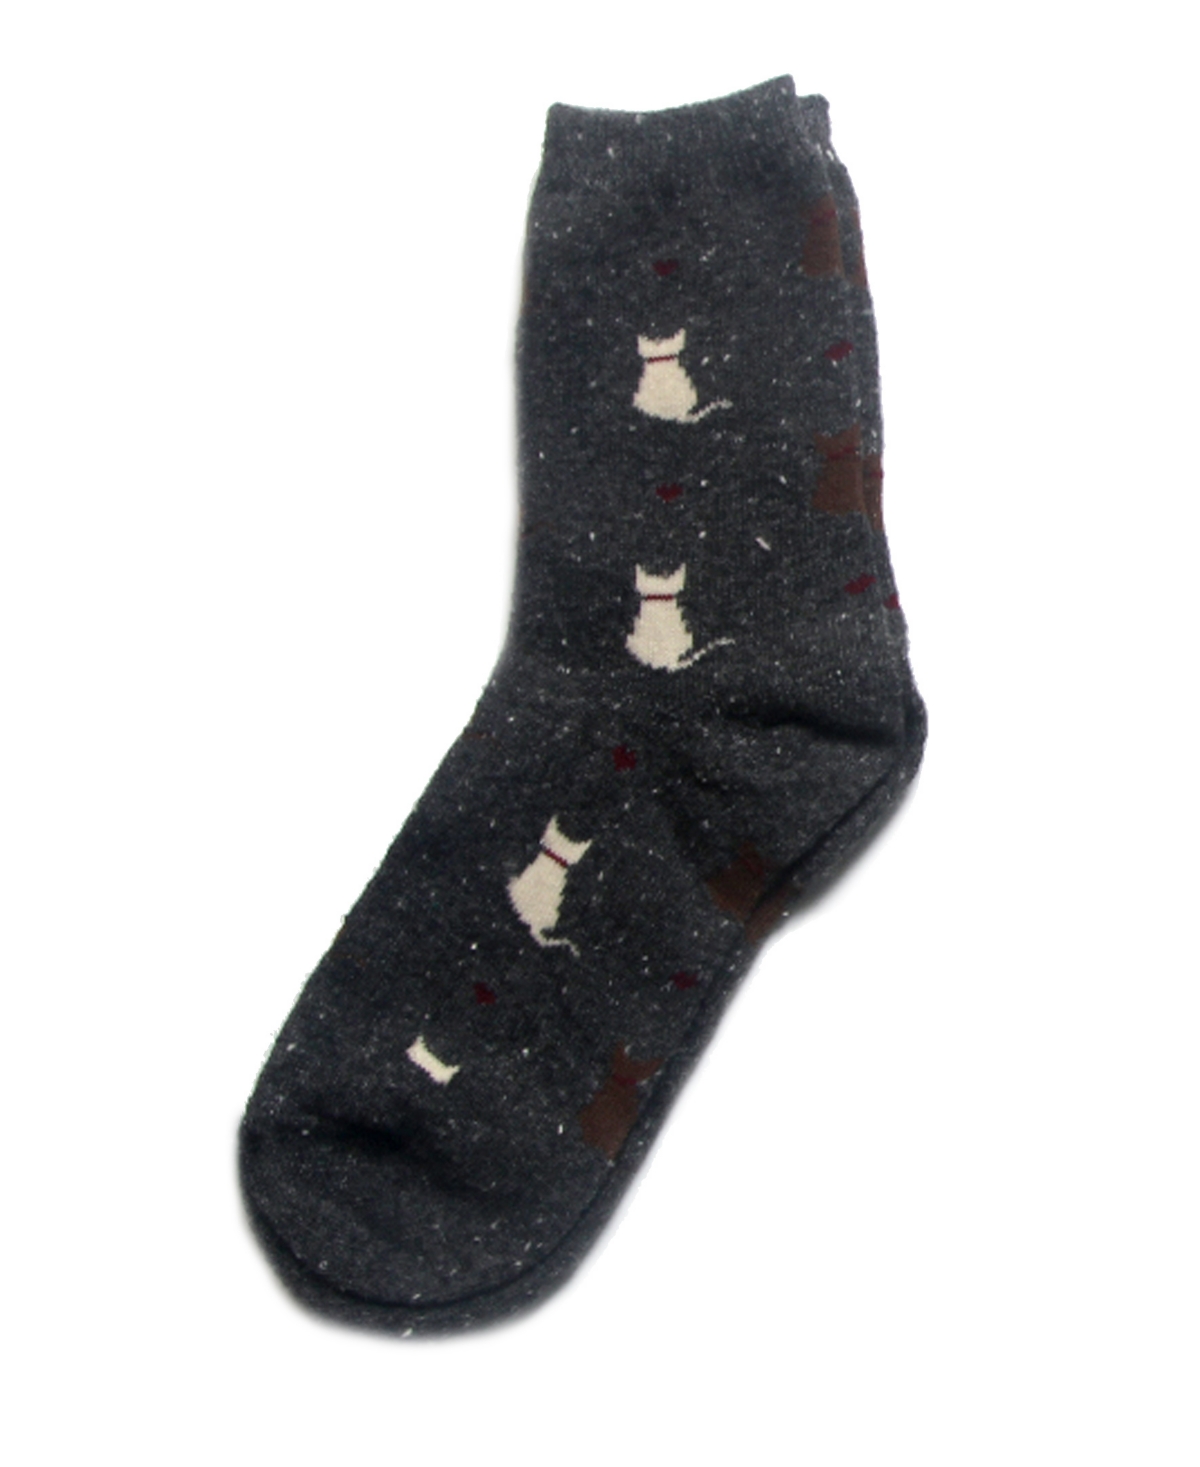 Cat crew socks - Charcoal